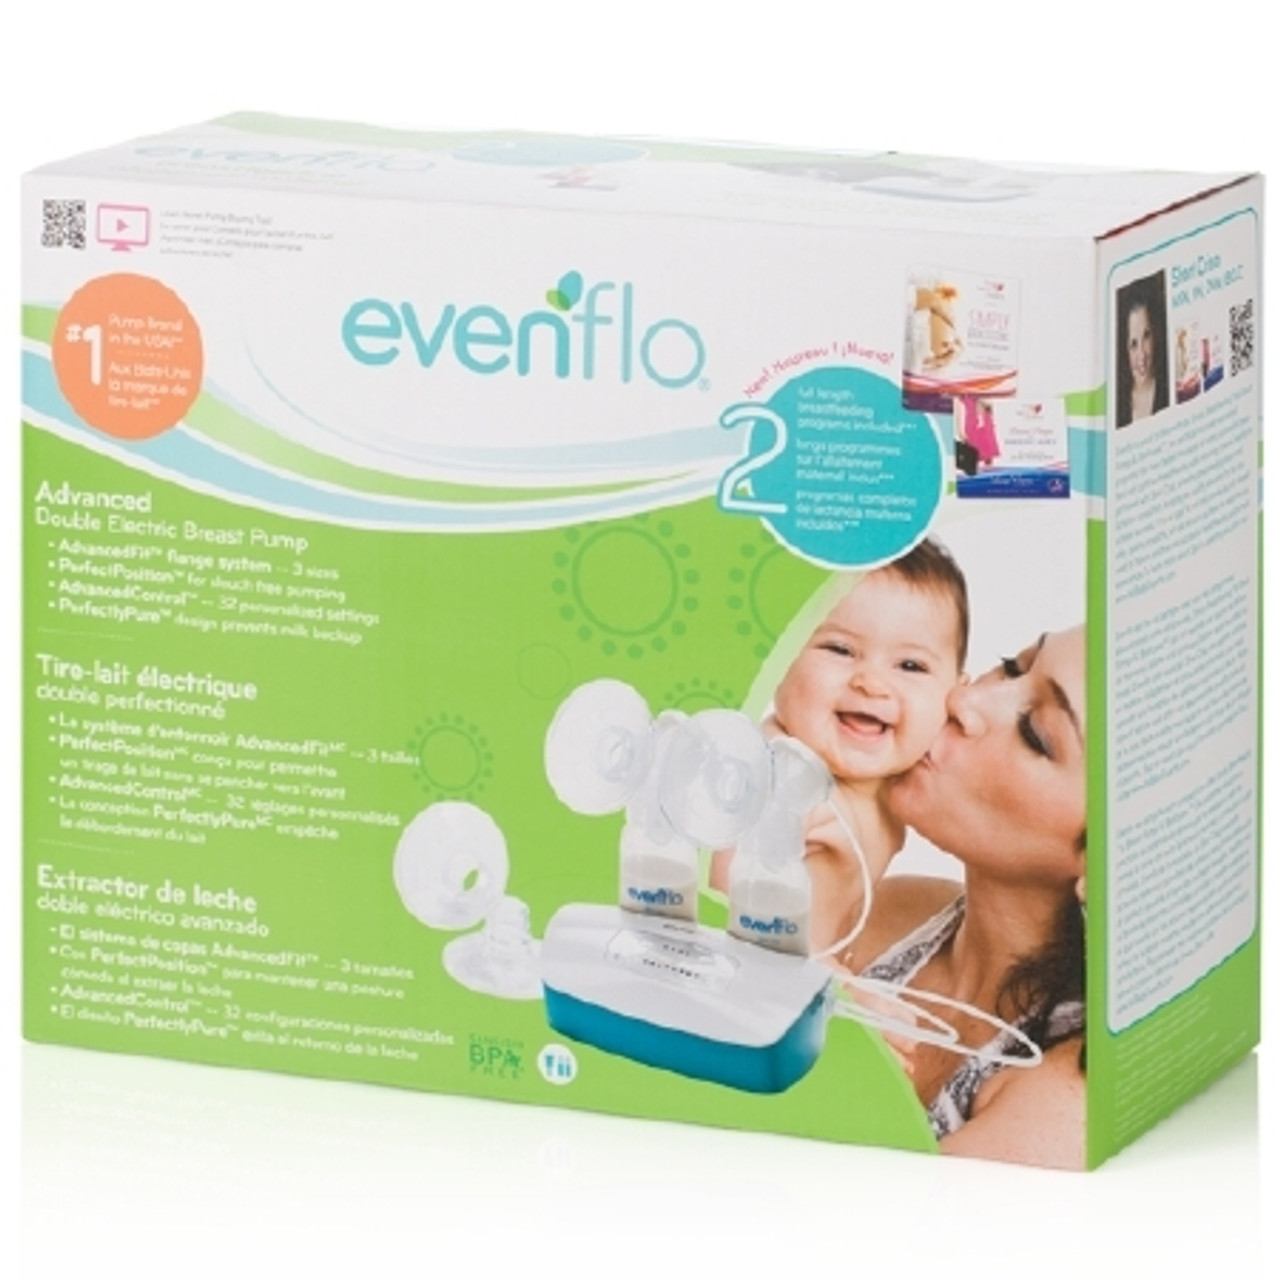 Evenflo Advanced Breast Pump Kit by Evenflo Company